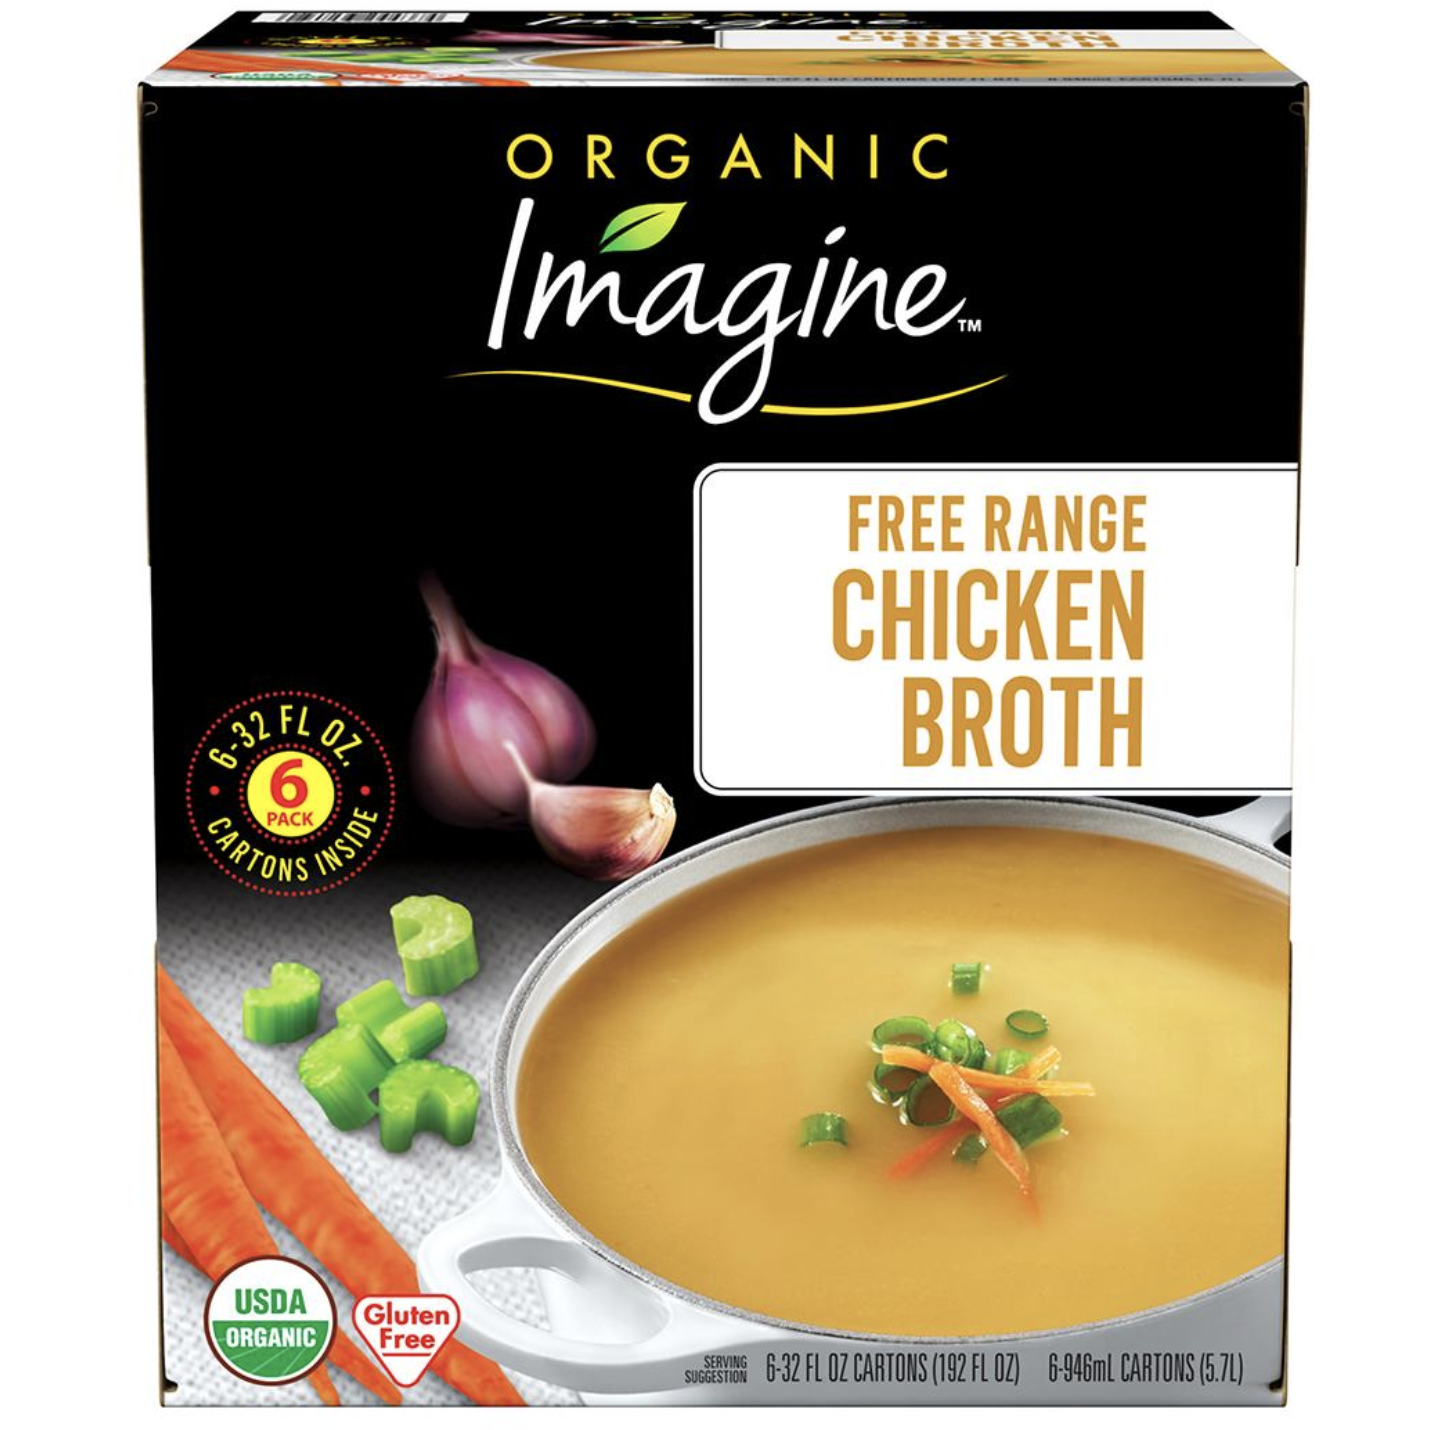 Imagine Organic Free-Range Chicken Broth, 6 pk./32 fl. oz.